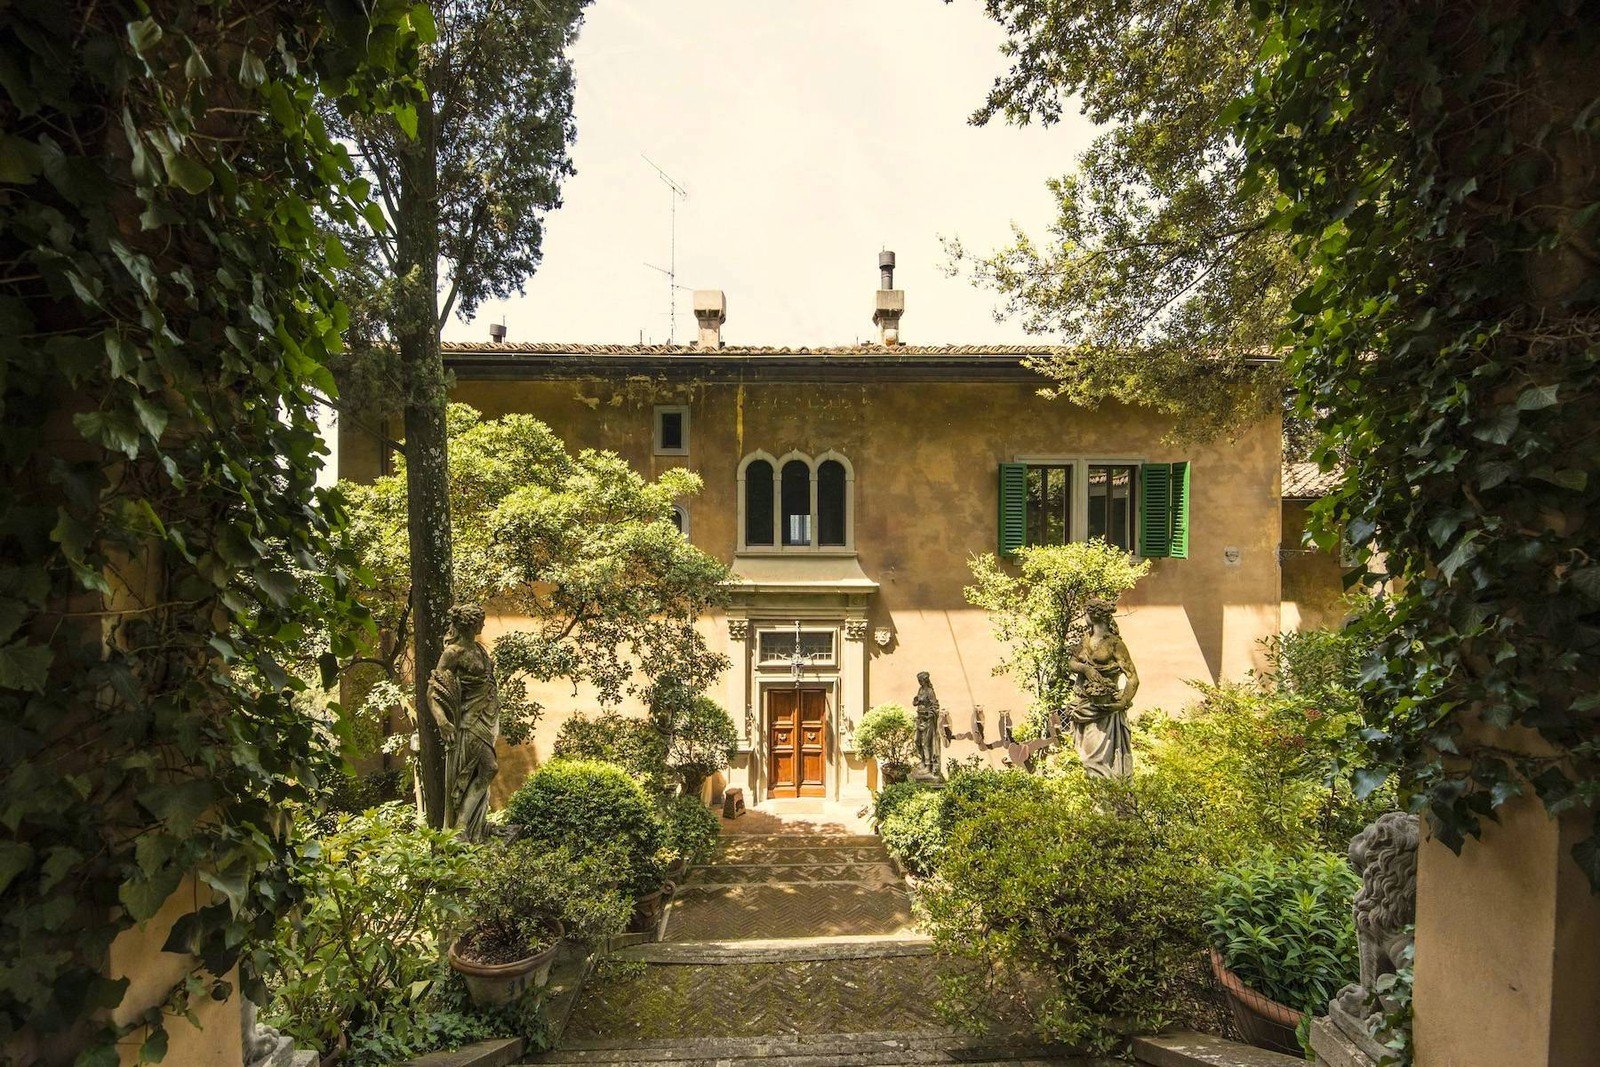 Francis York Italian Villa Set in the Tuscan Hills Overlooking Florence, Italy 00003.jpeg